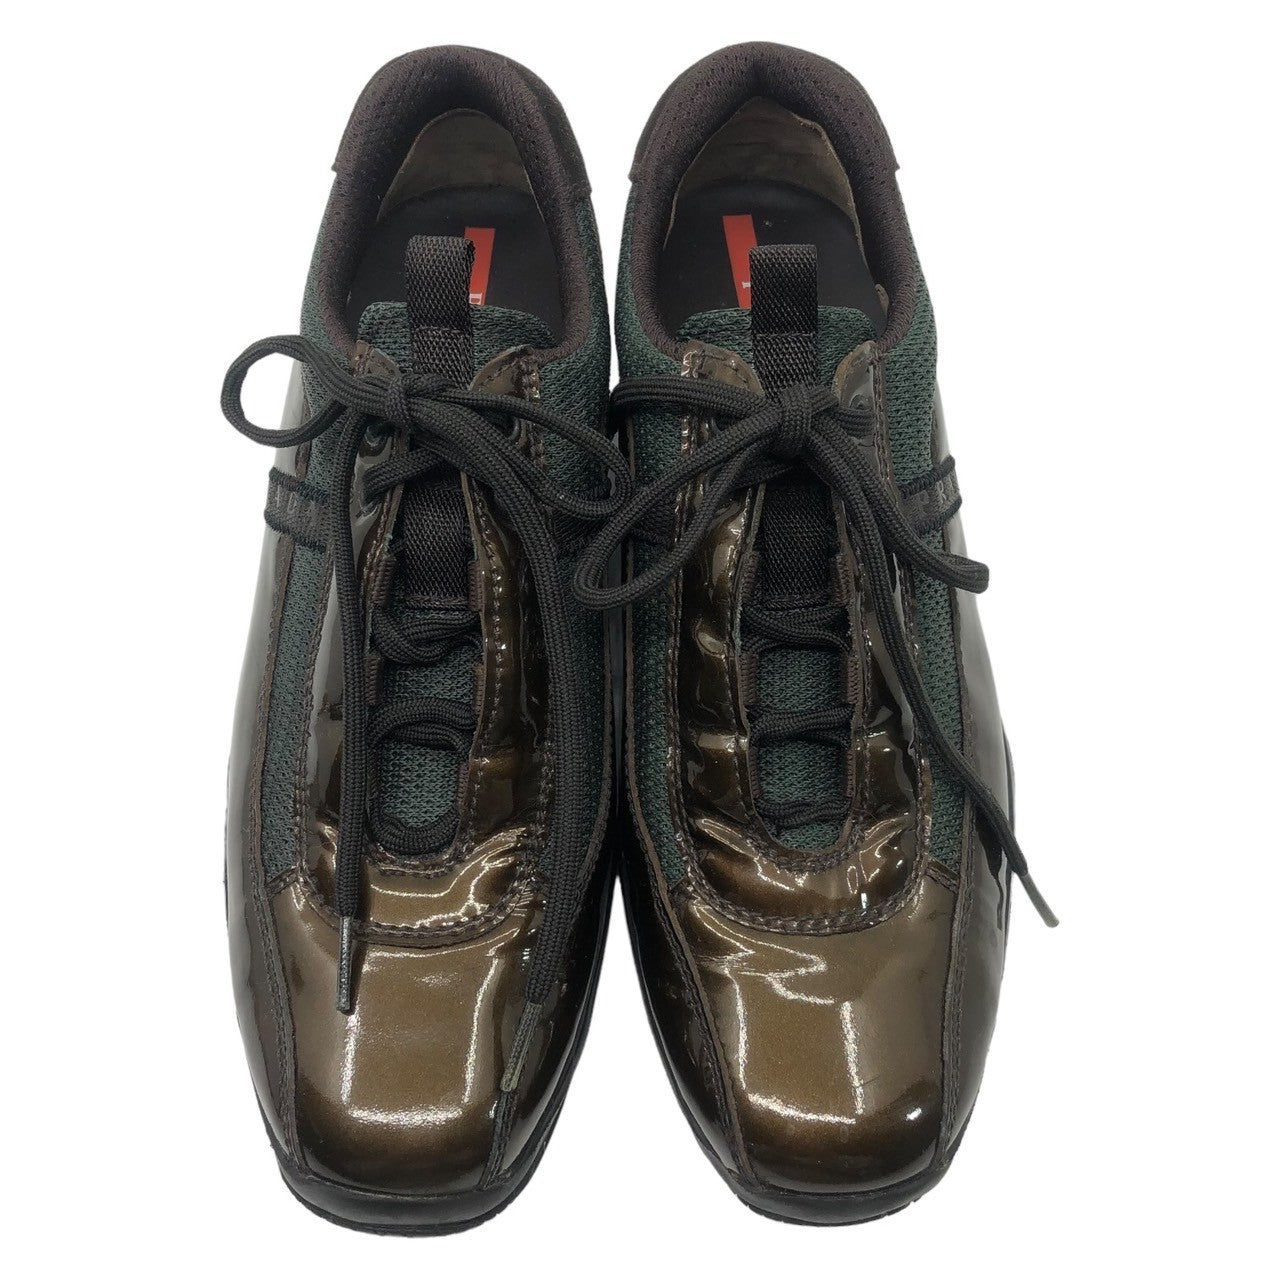 PRADA SPORT(プラダスポーツ) 00's enamel tech shoes エナメル テック シューズ ローカット スニーカー 3261 37(23.5cm程度) ブラウン×グレー